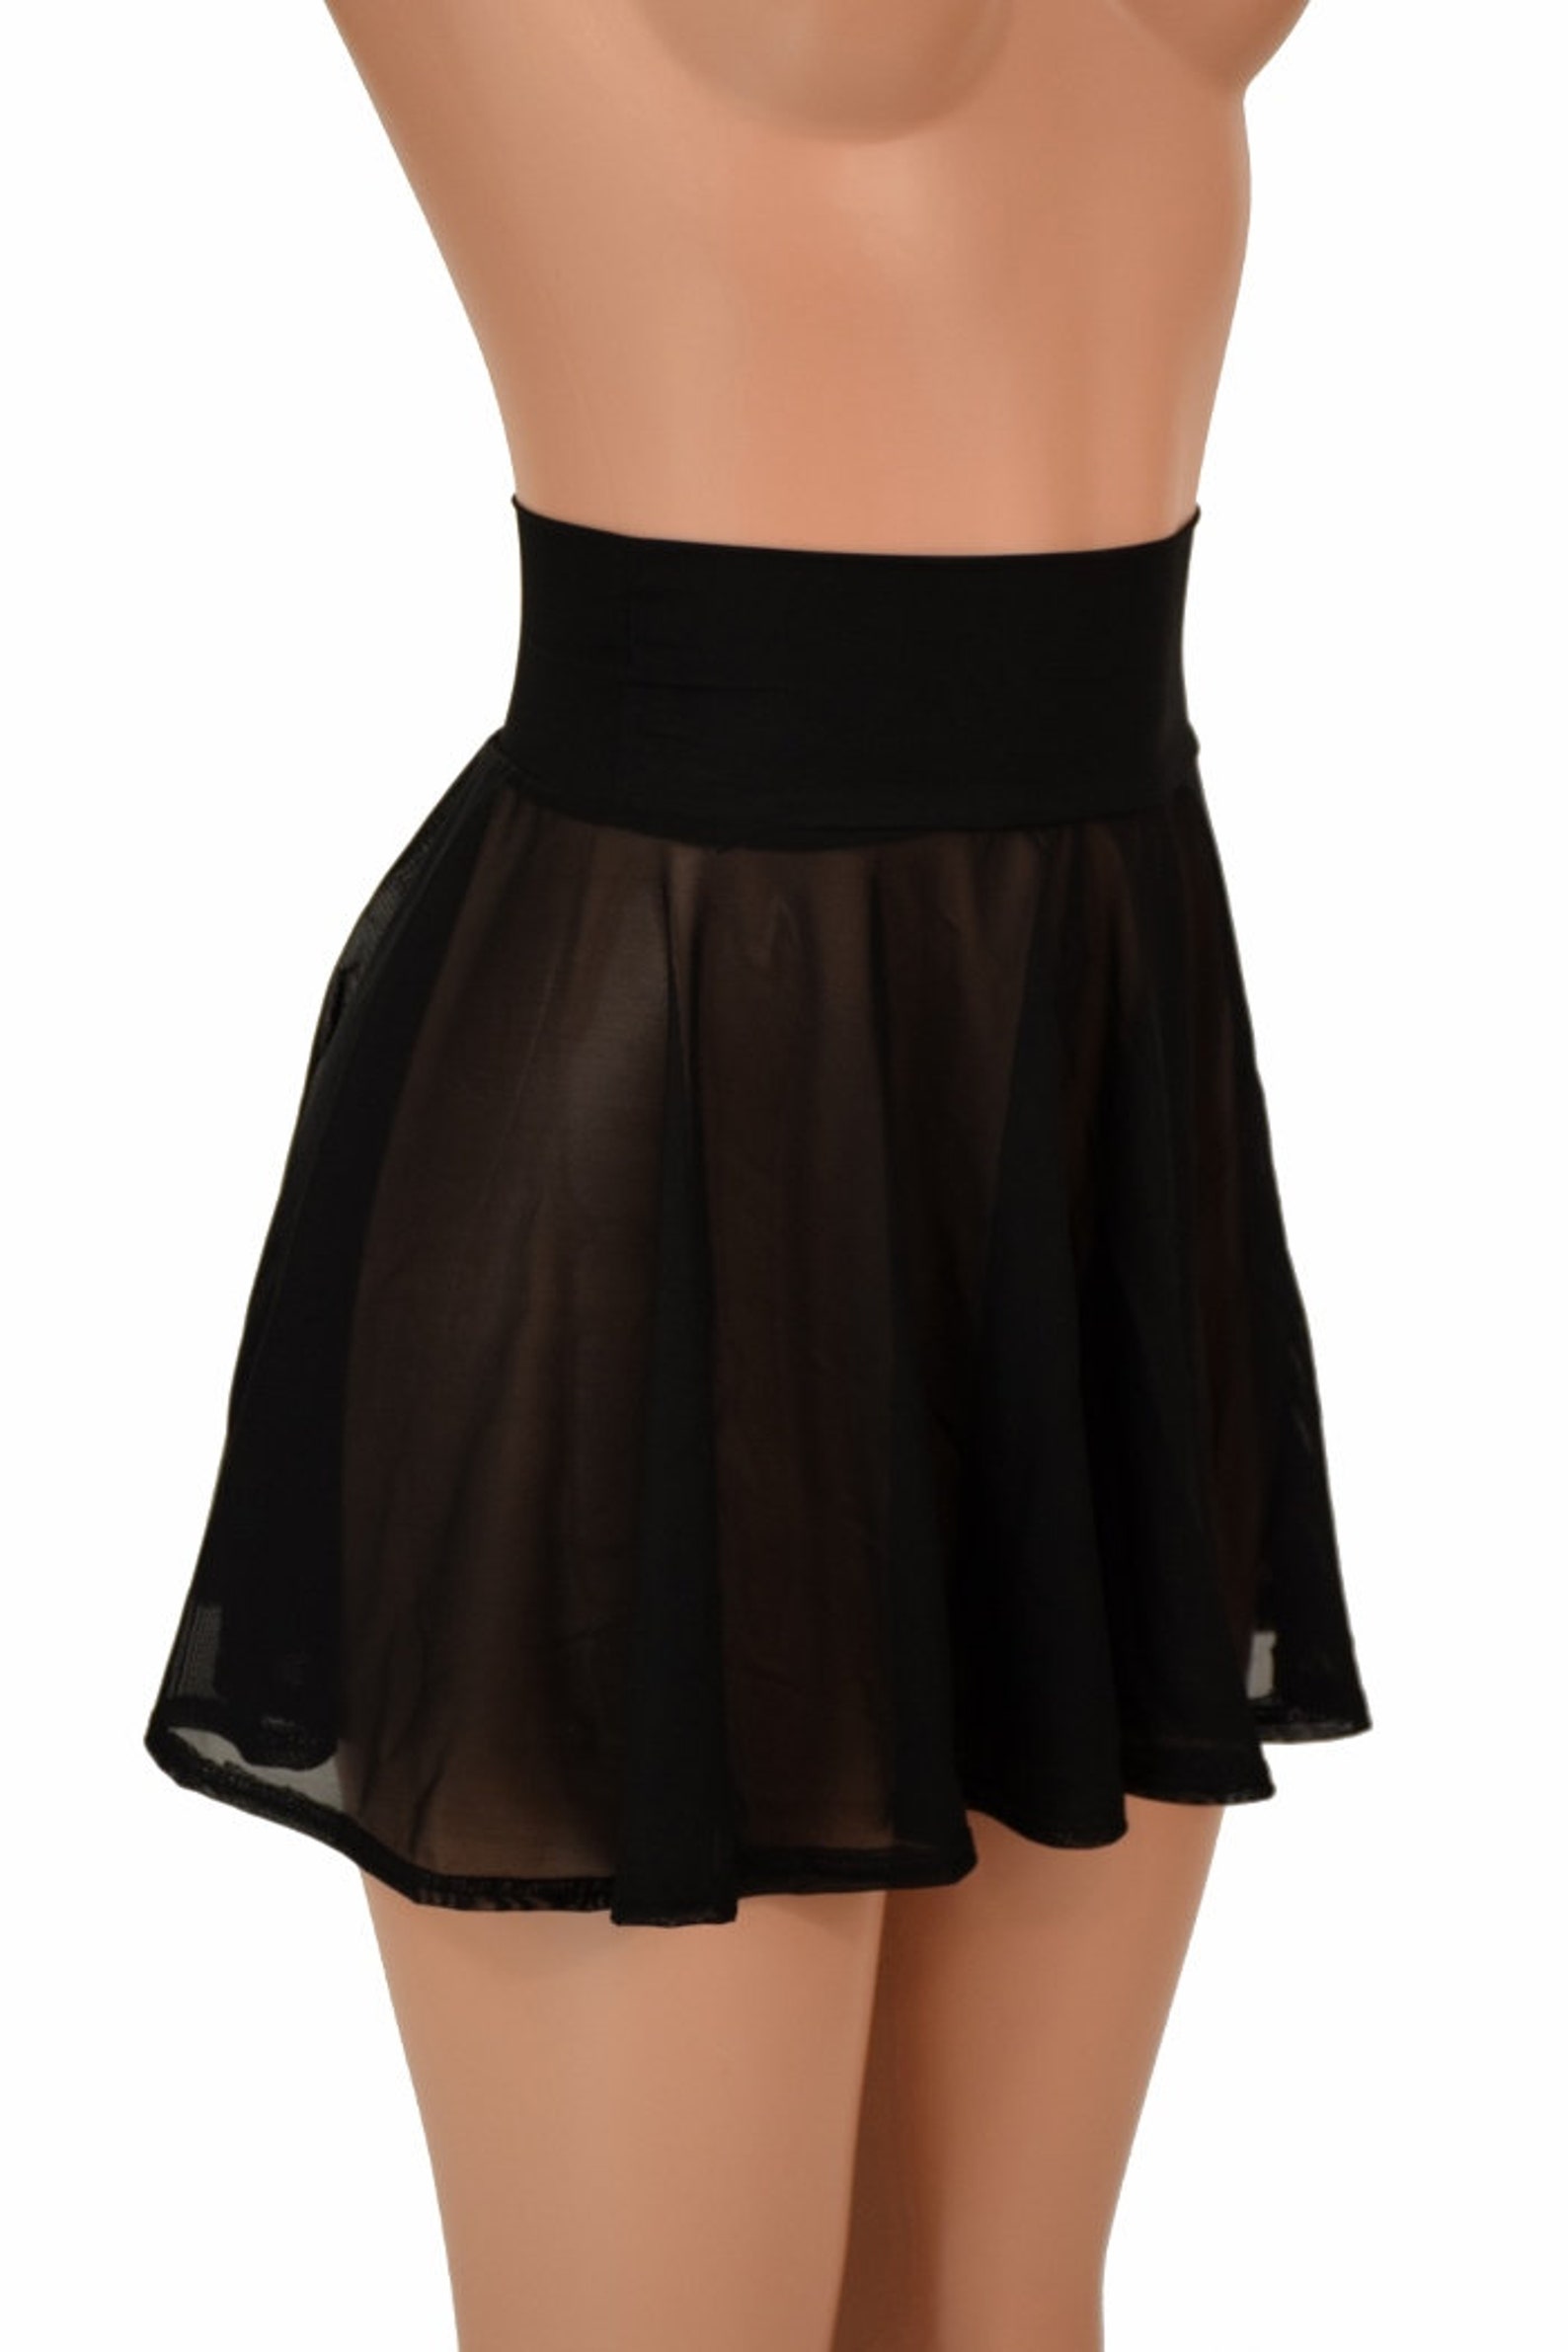 Black Mesh Sheer See Through Circle Cut Mini Skirt 155800 | Etsy